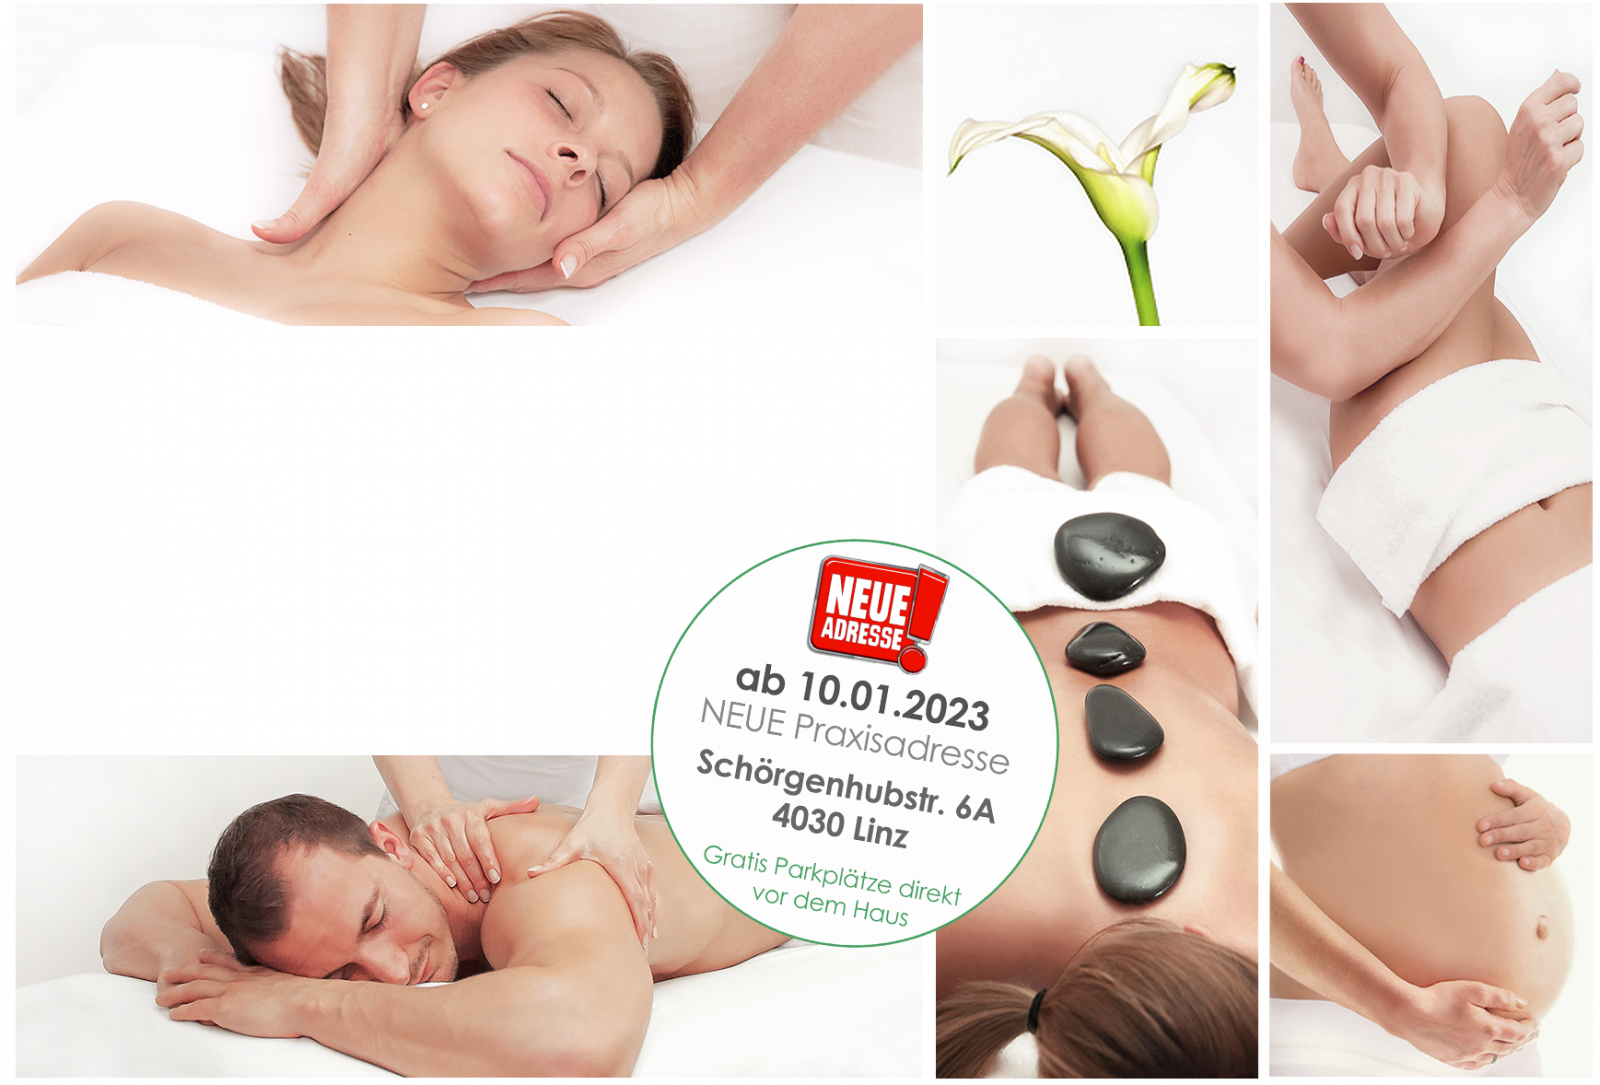 Wellness Massagen Sandra Marterer, NEUE Adresse ab 10.01.2023